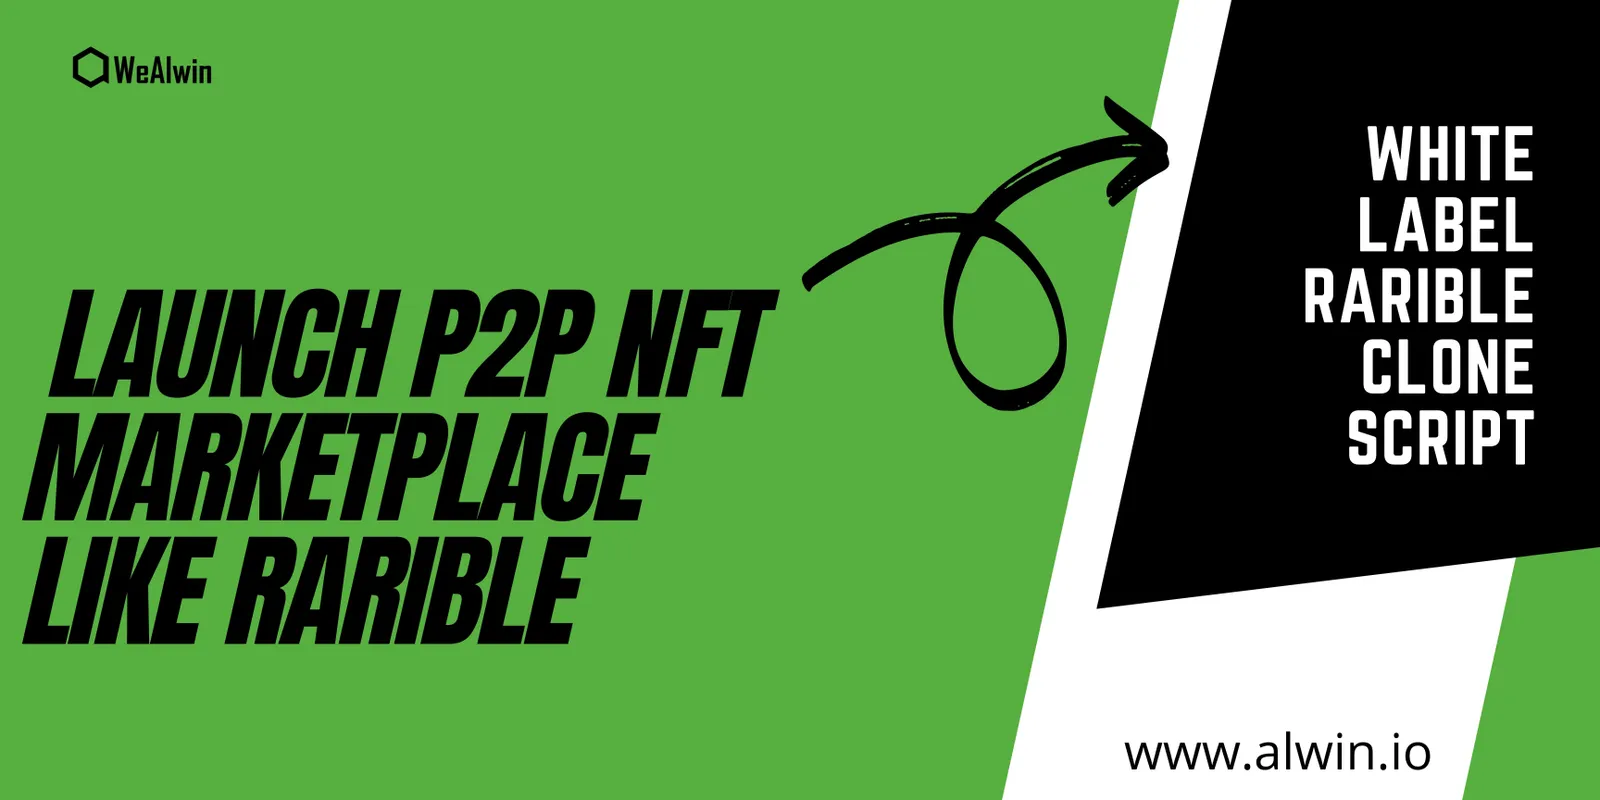 White label Rarible clone script to launch p2p NFT marketplace 